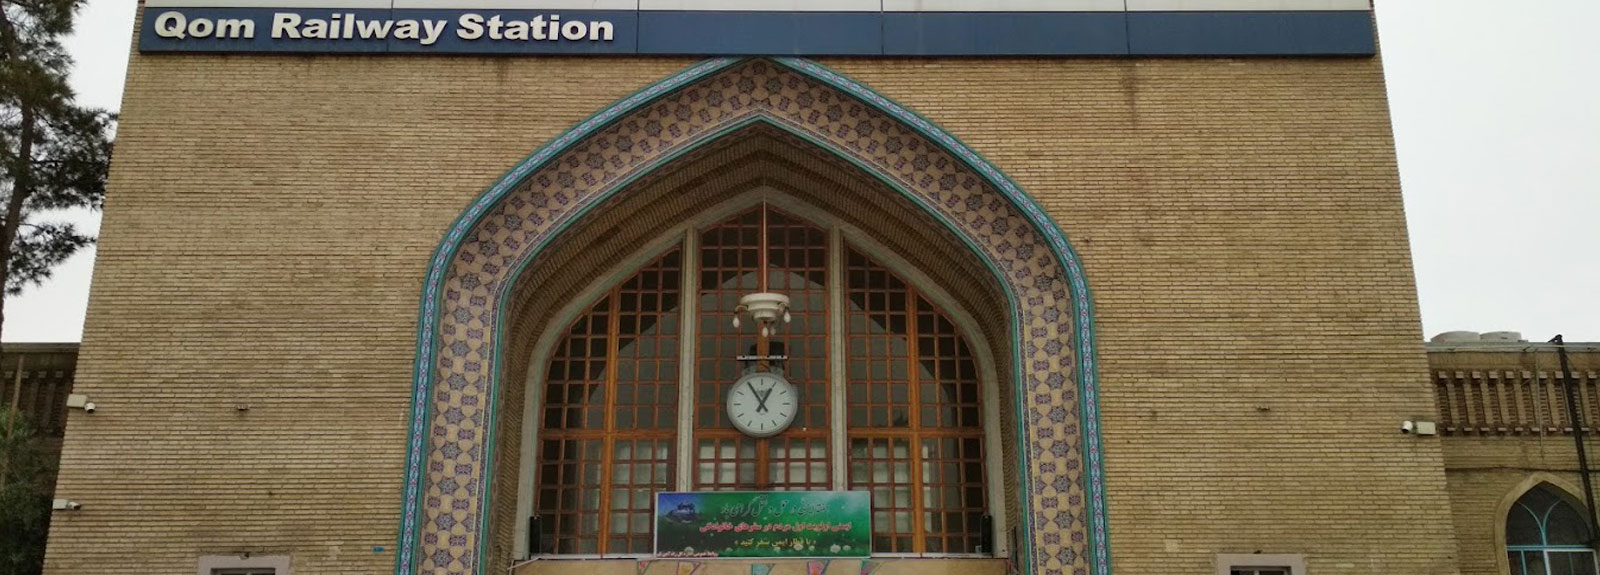 Qom railway station (Qom train station)